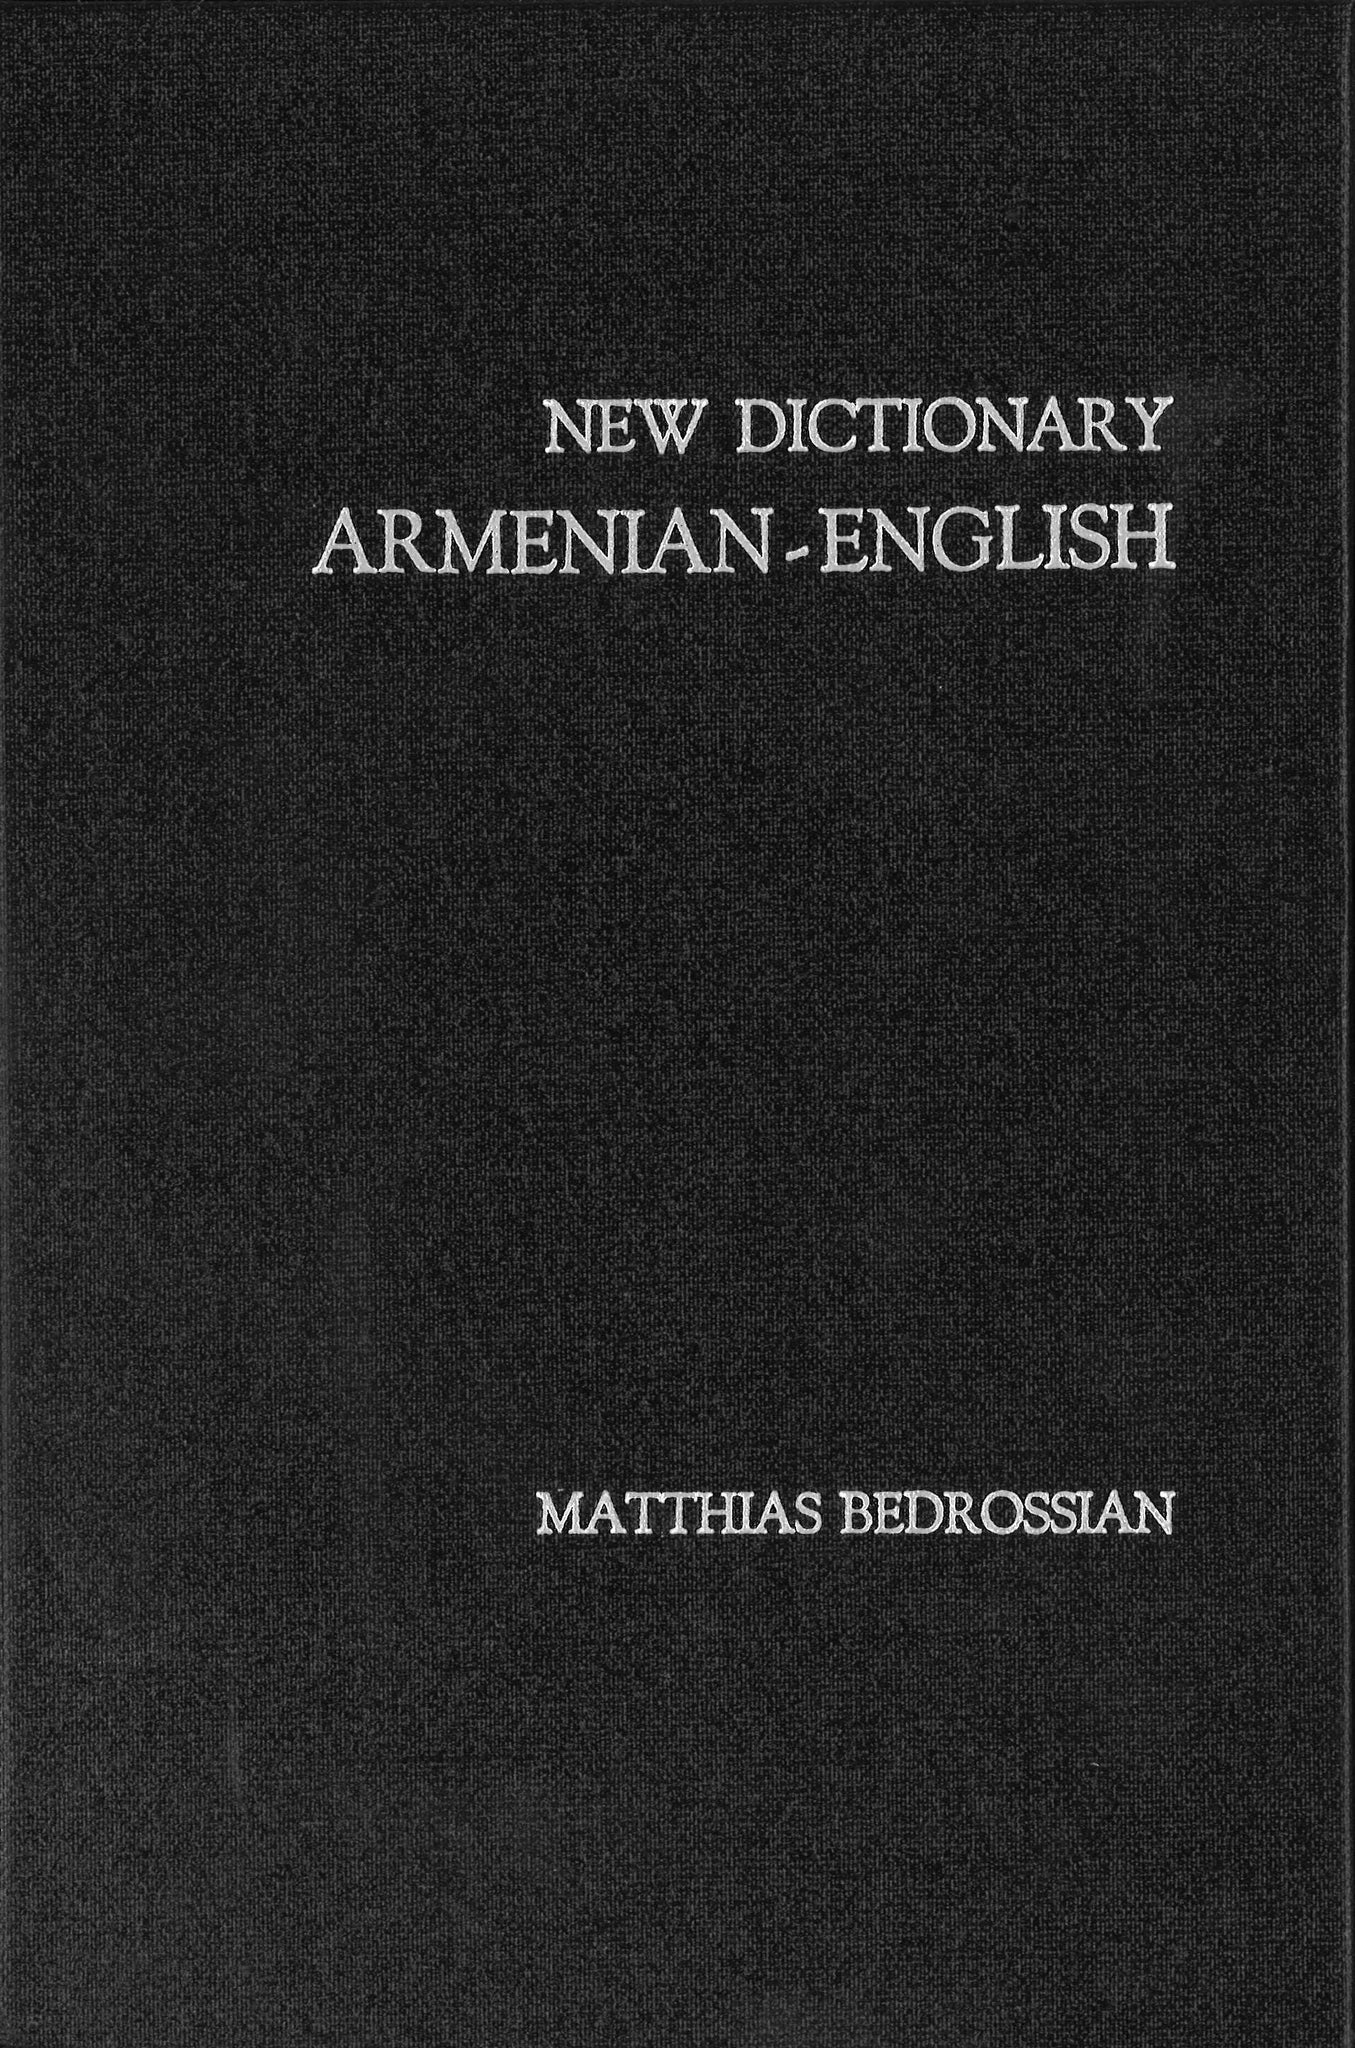 NEW DICTIONARY: ARMENIAN-ENGLISH ENGLISH-ARMENIAN